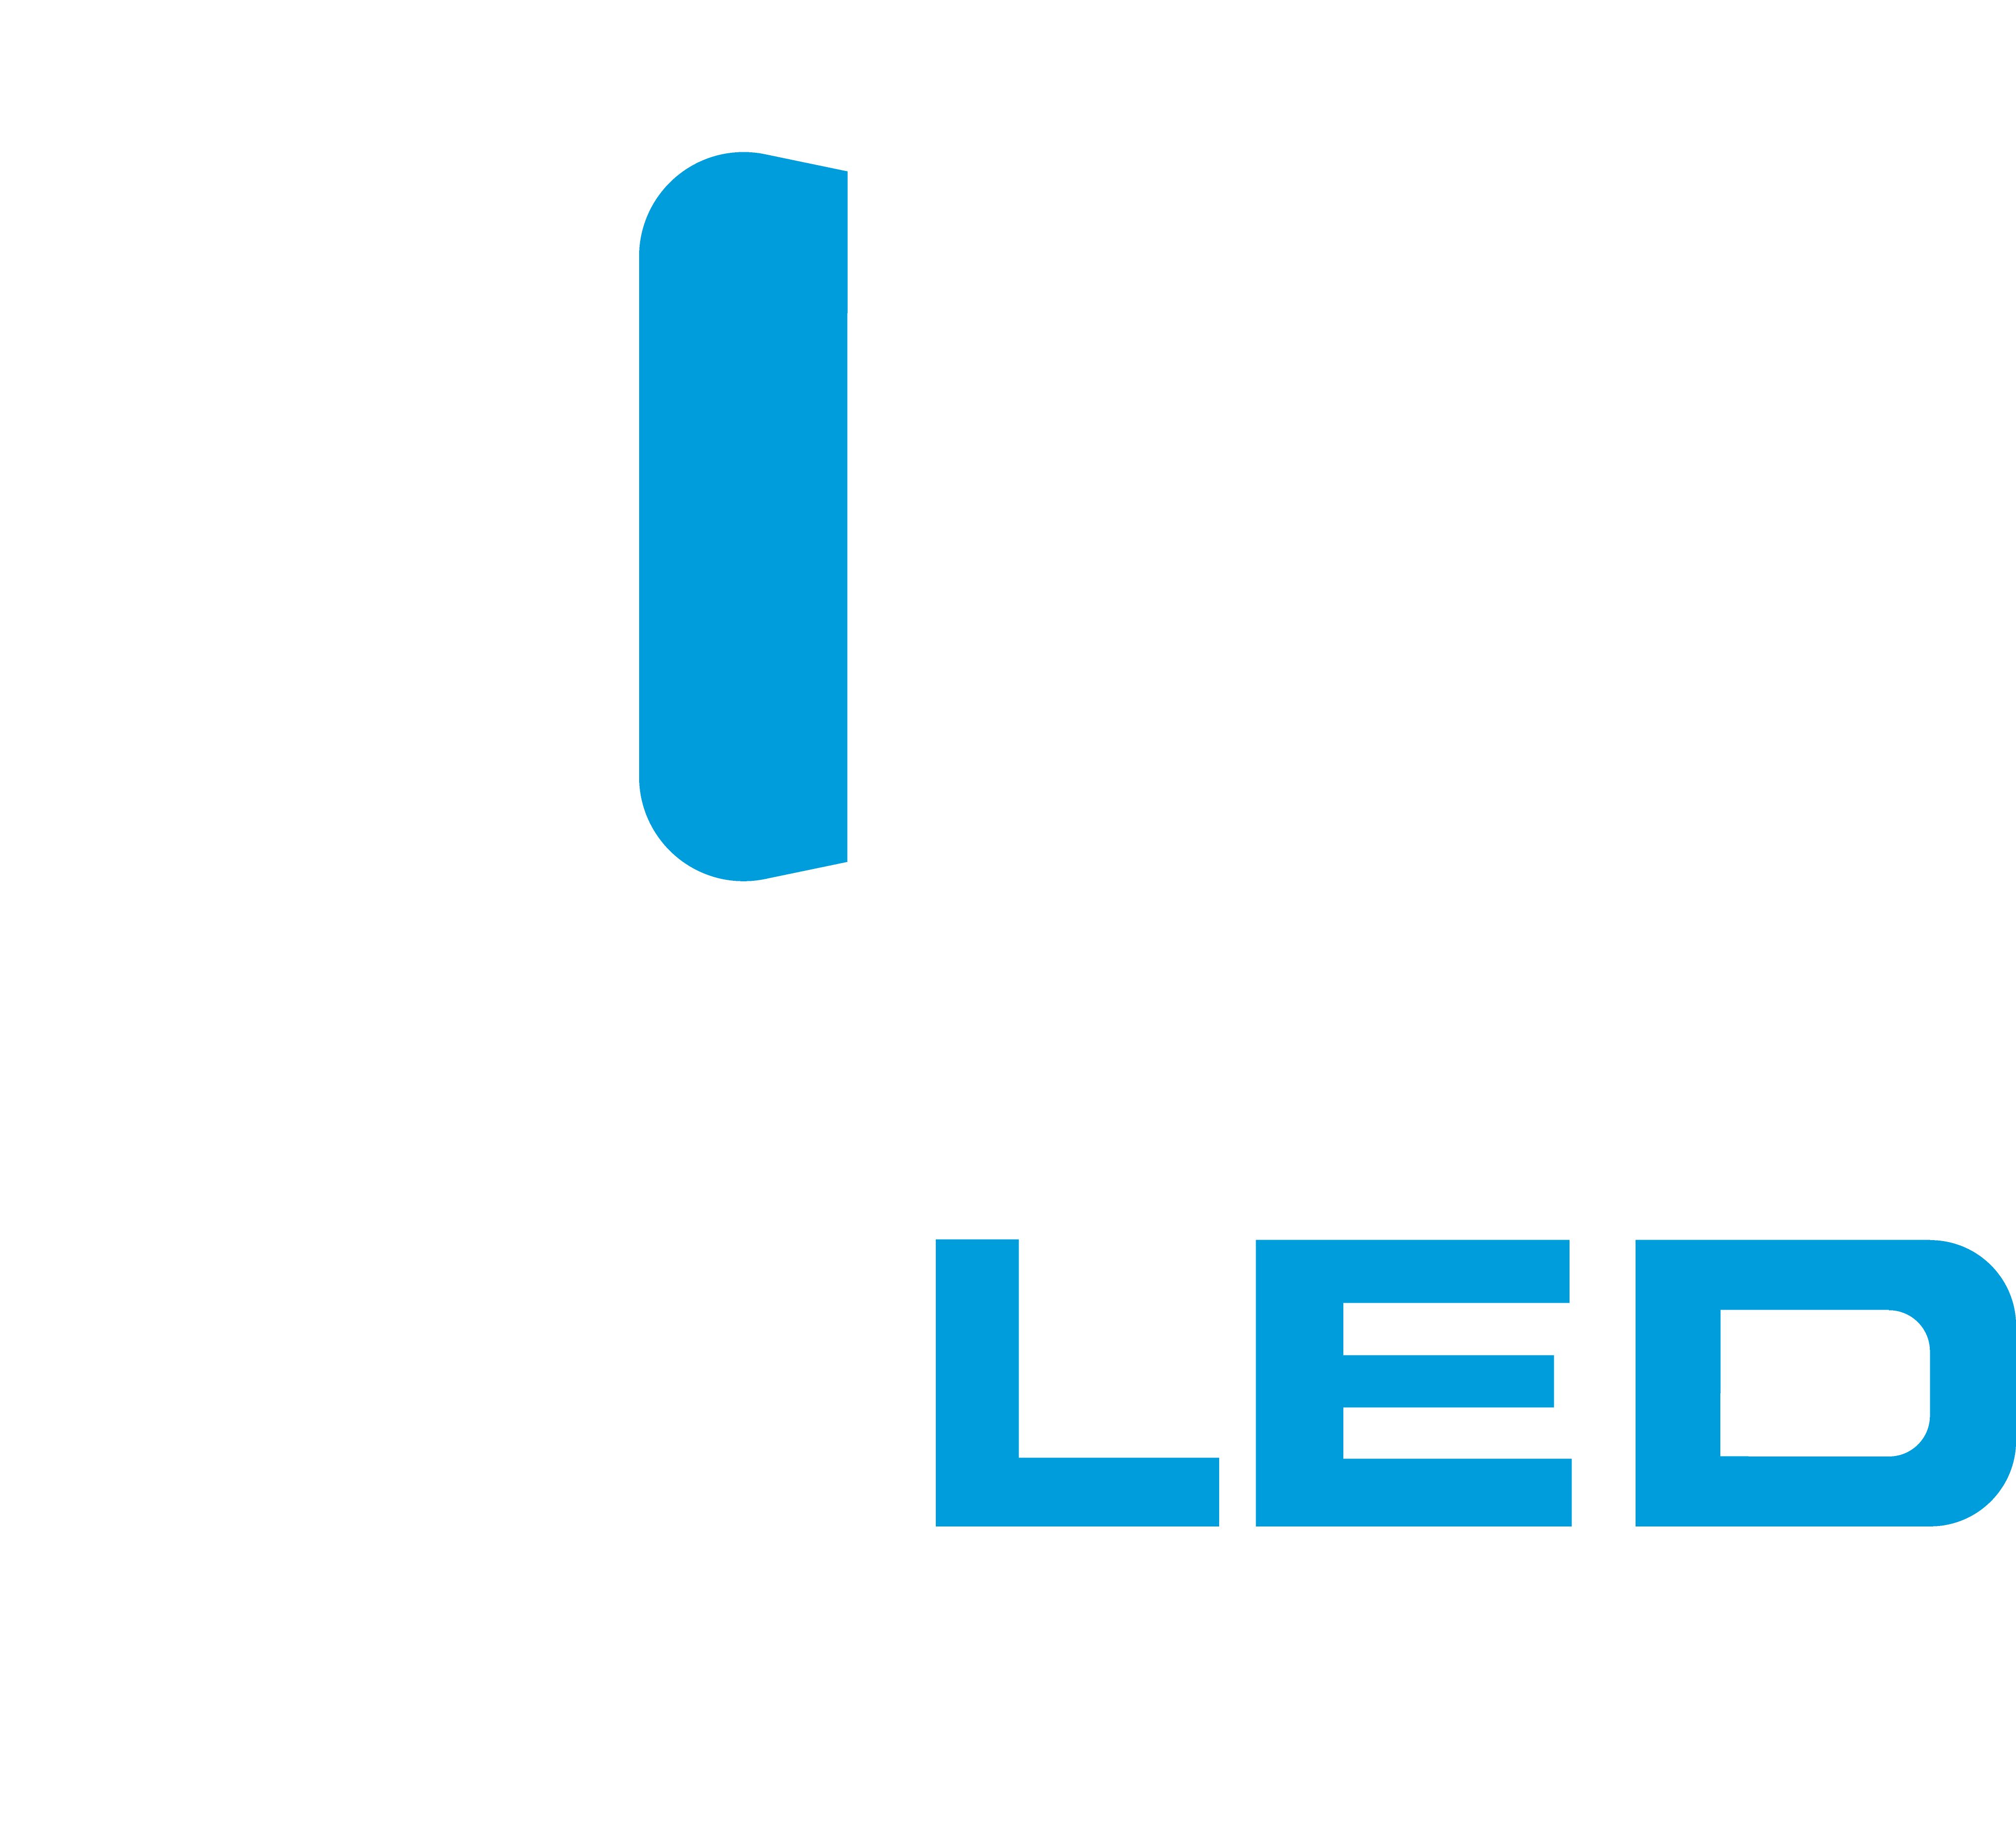 digiLED – THE LED SCREEN EXPERTS